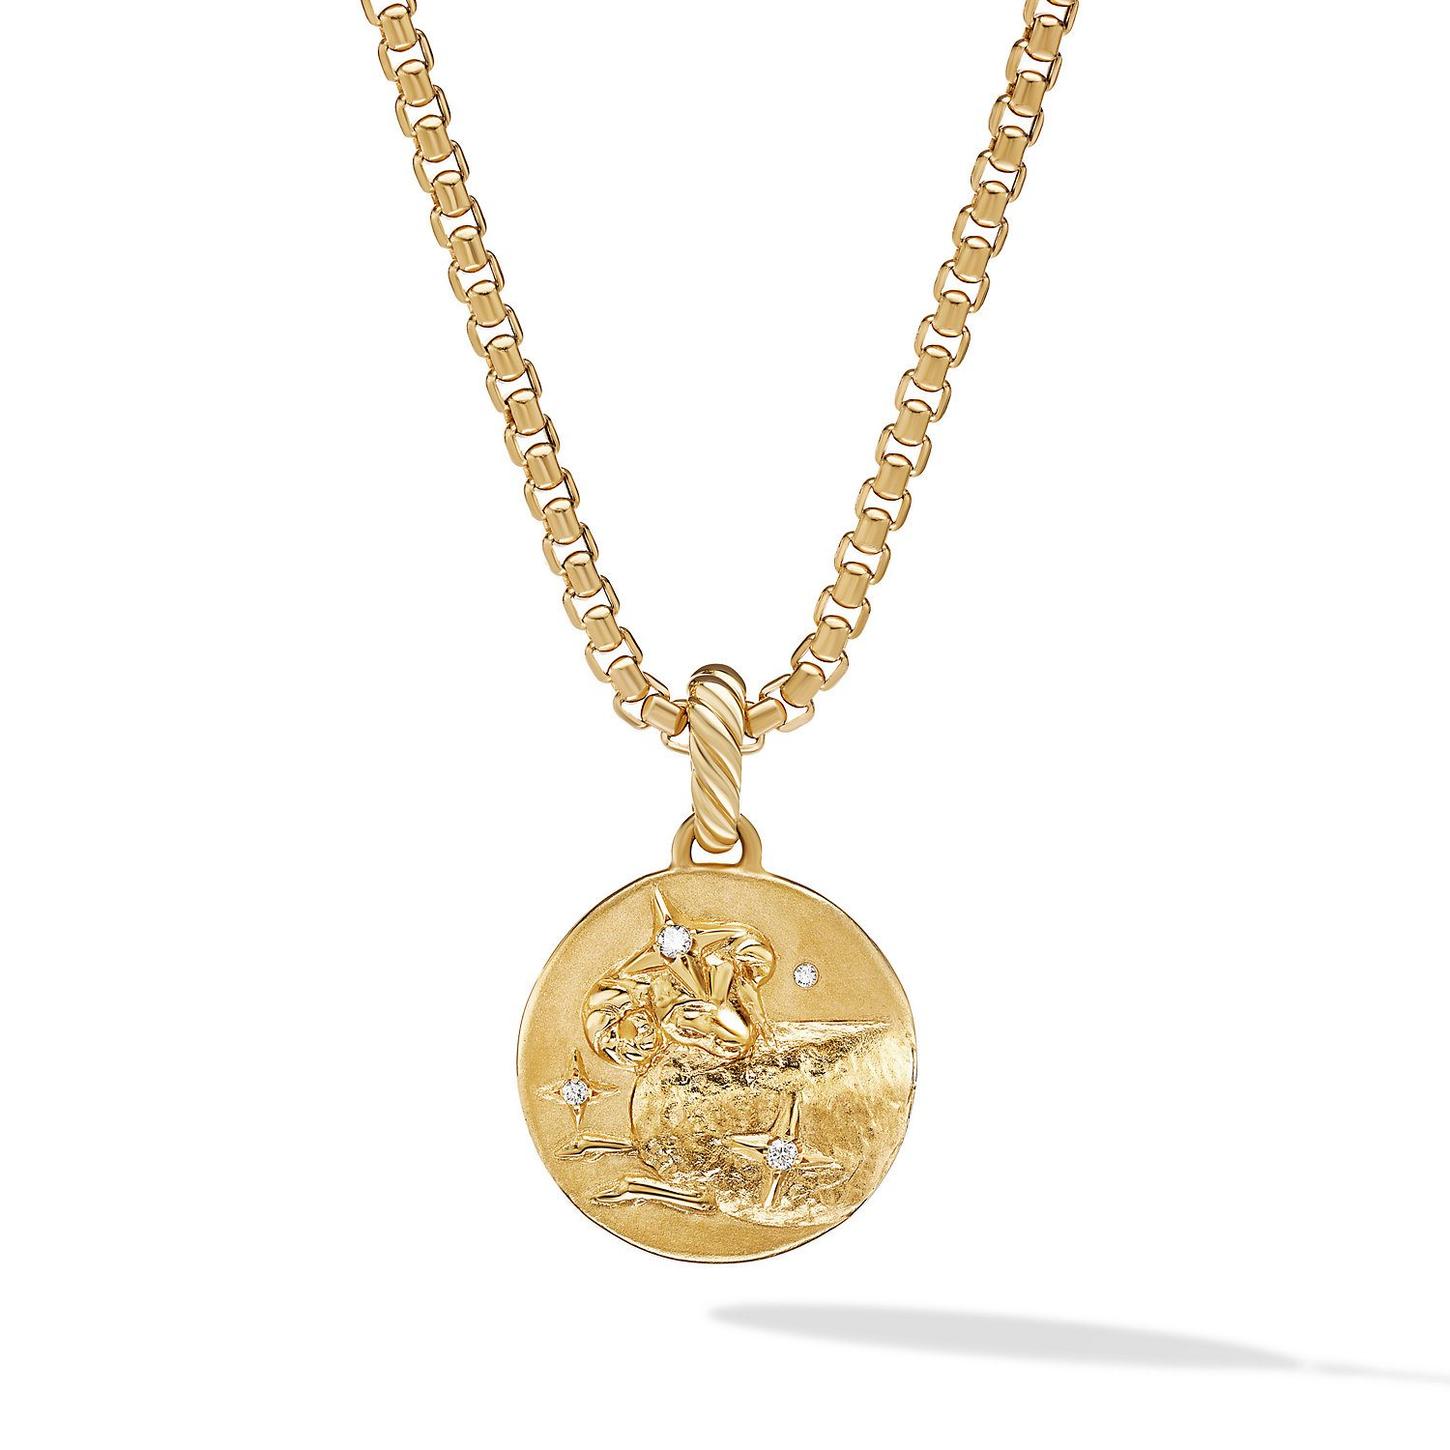 David Yurman Aries Amulet in 18k Yellow Gold with Diamonds 1